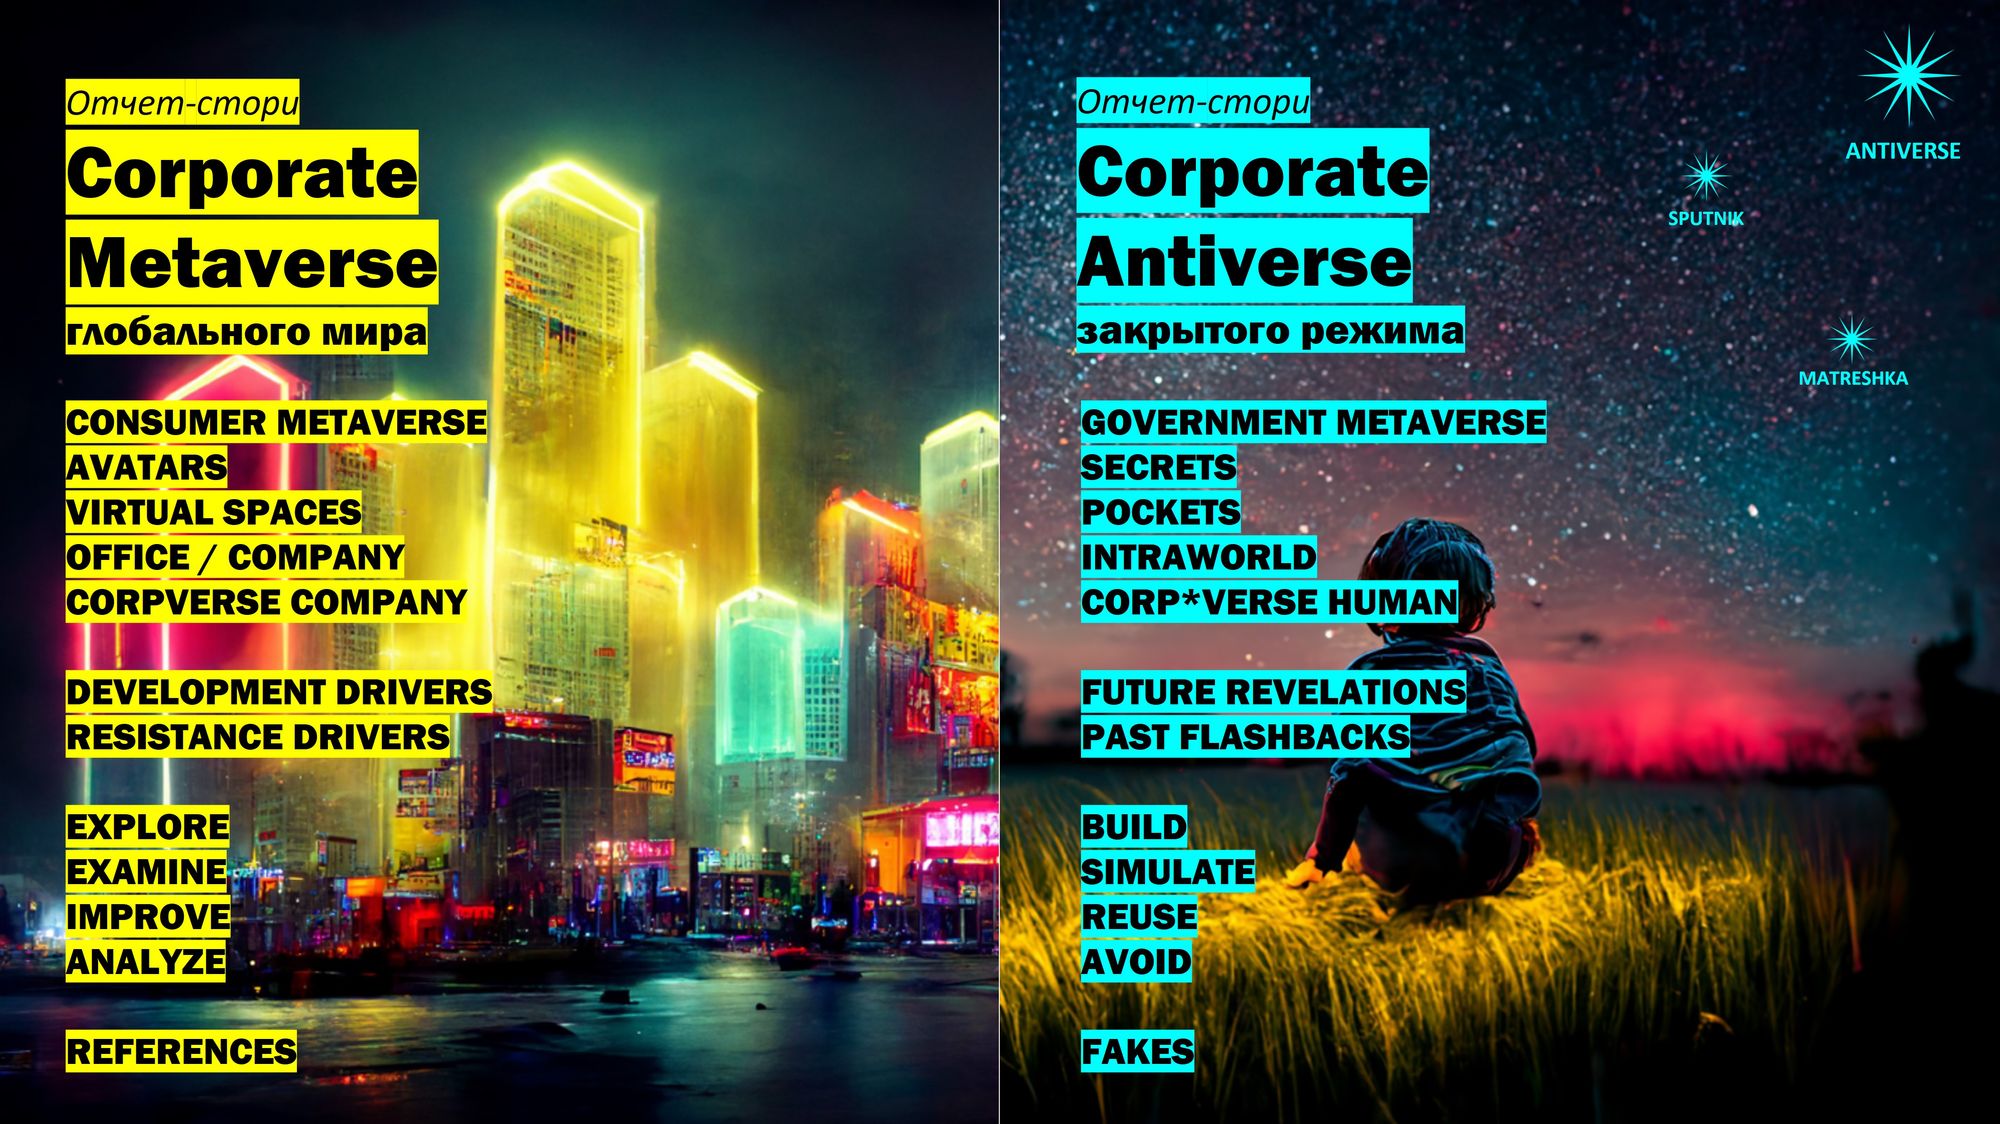 🧊 The Corporate Metaverse & Antiverse